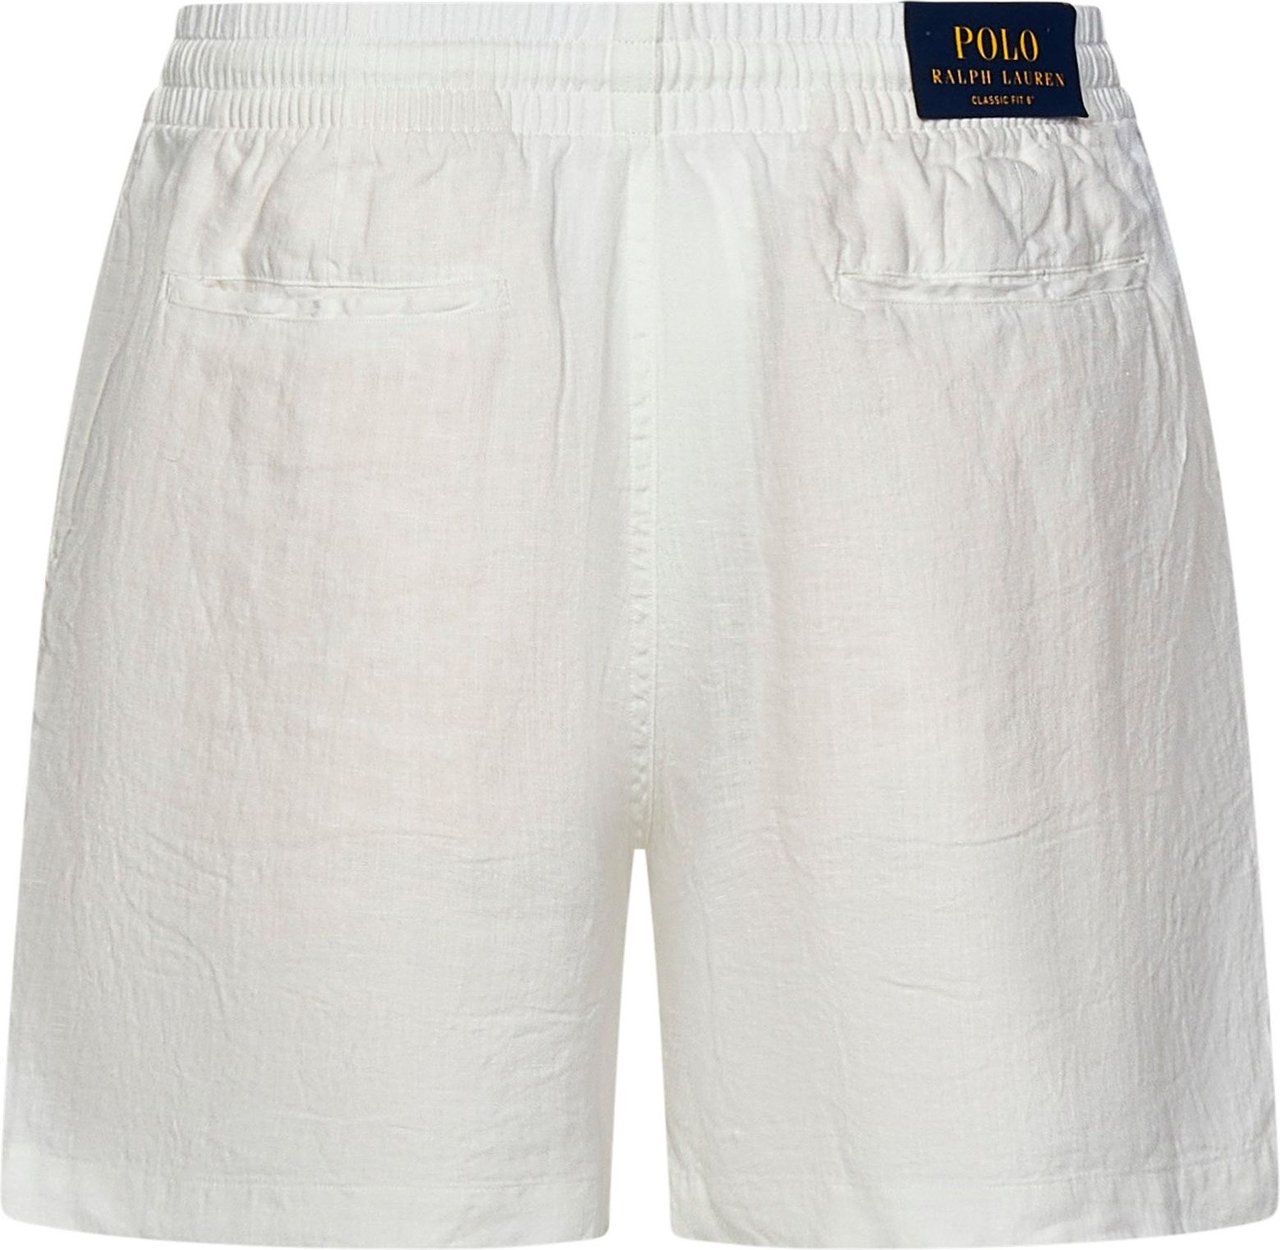 Ralph Lauren Polo Ralph Lauren Shorts White Wit